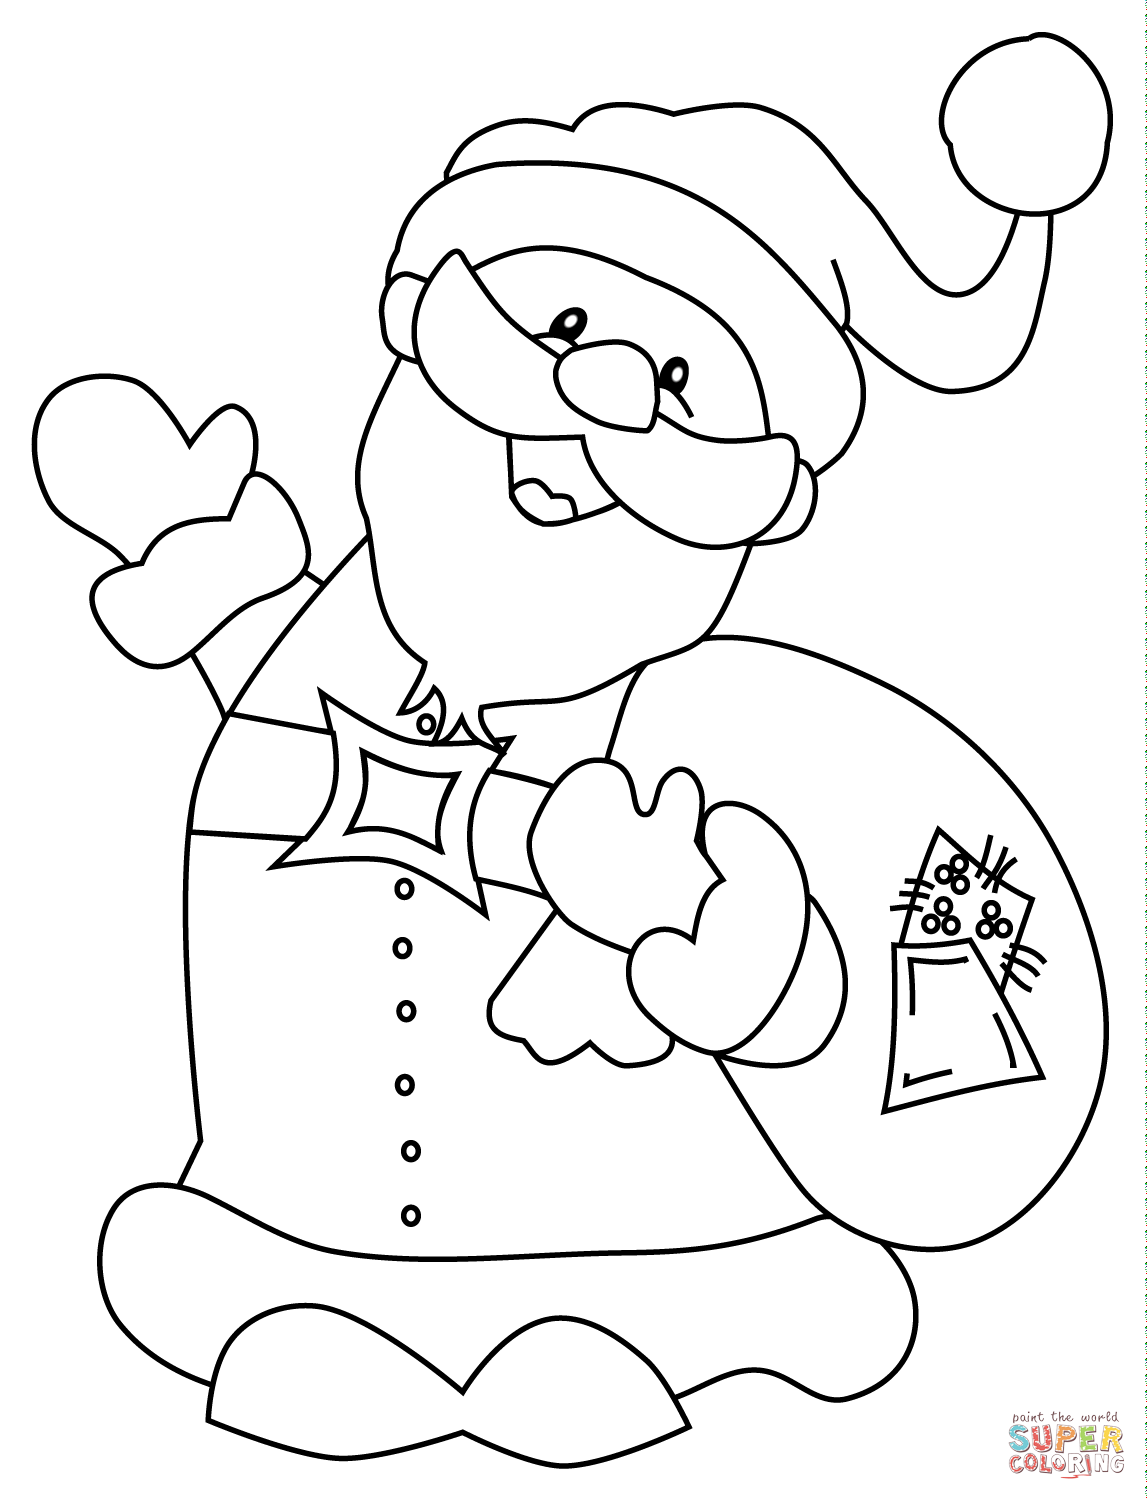 Printable santa claus coloring page